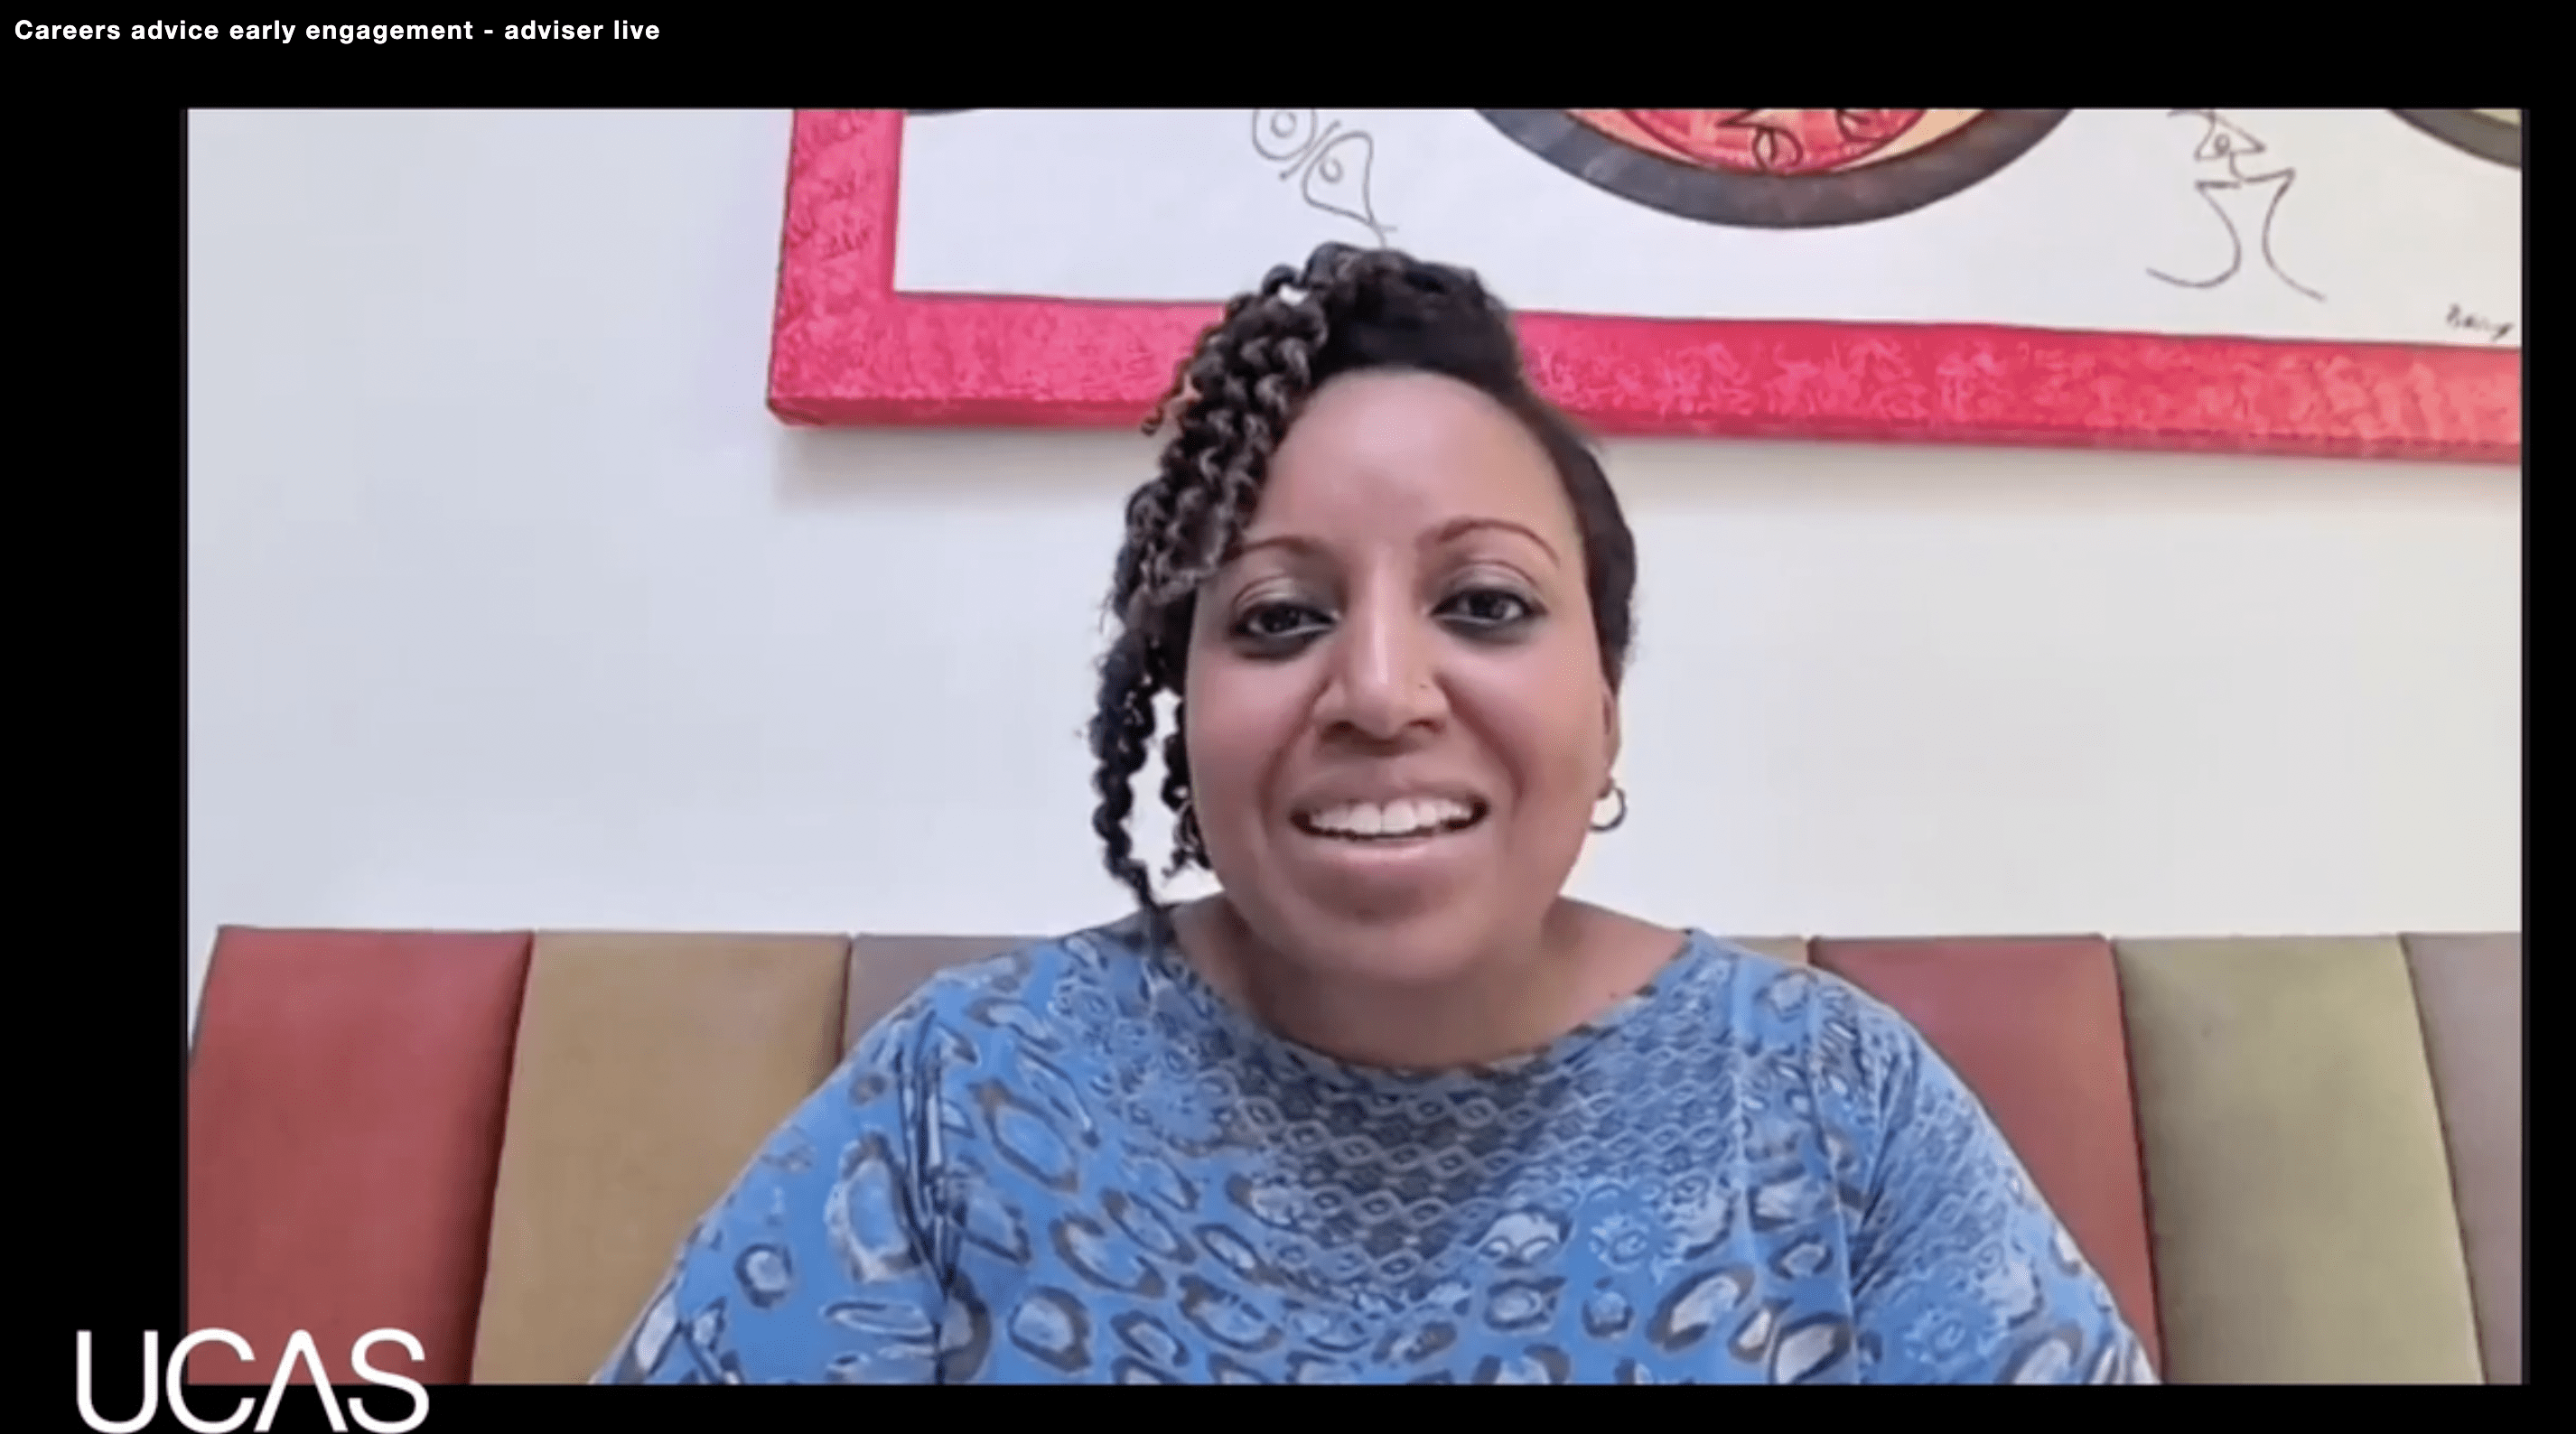 Gina Visram UCAS Adviser Live webinar